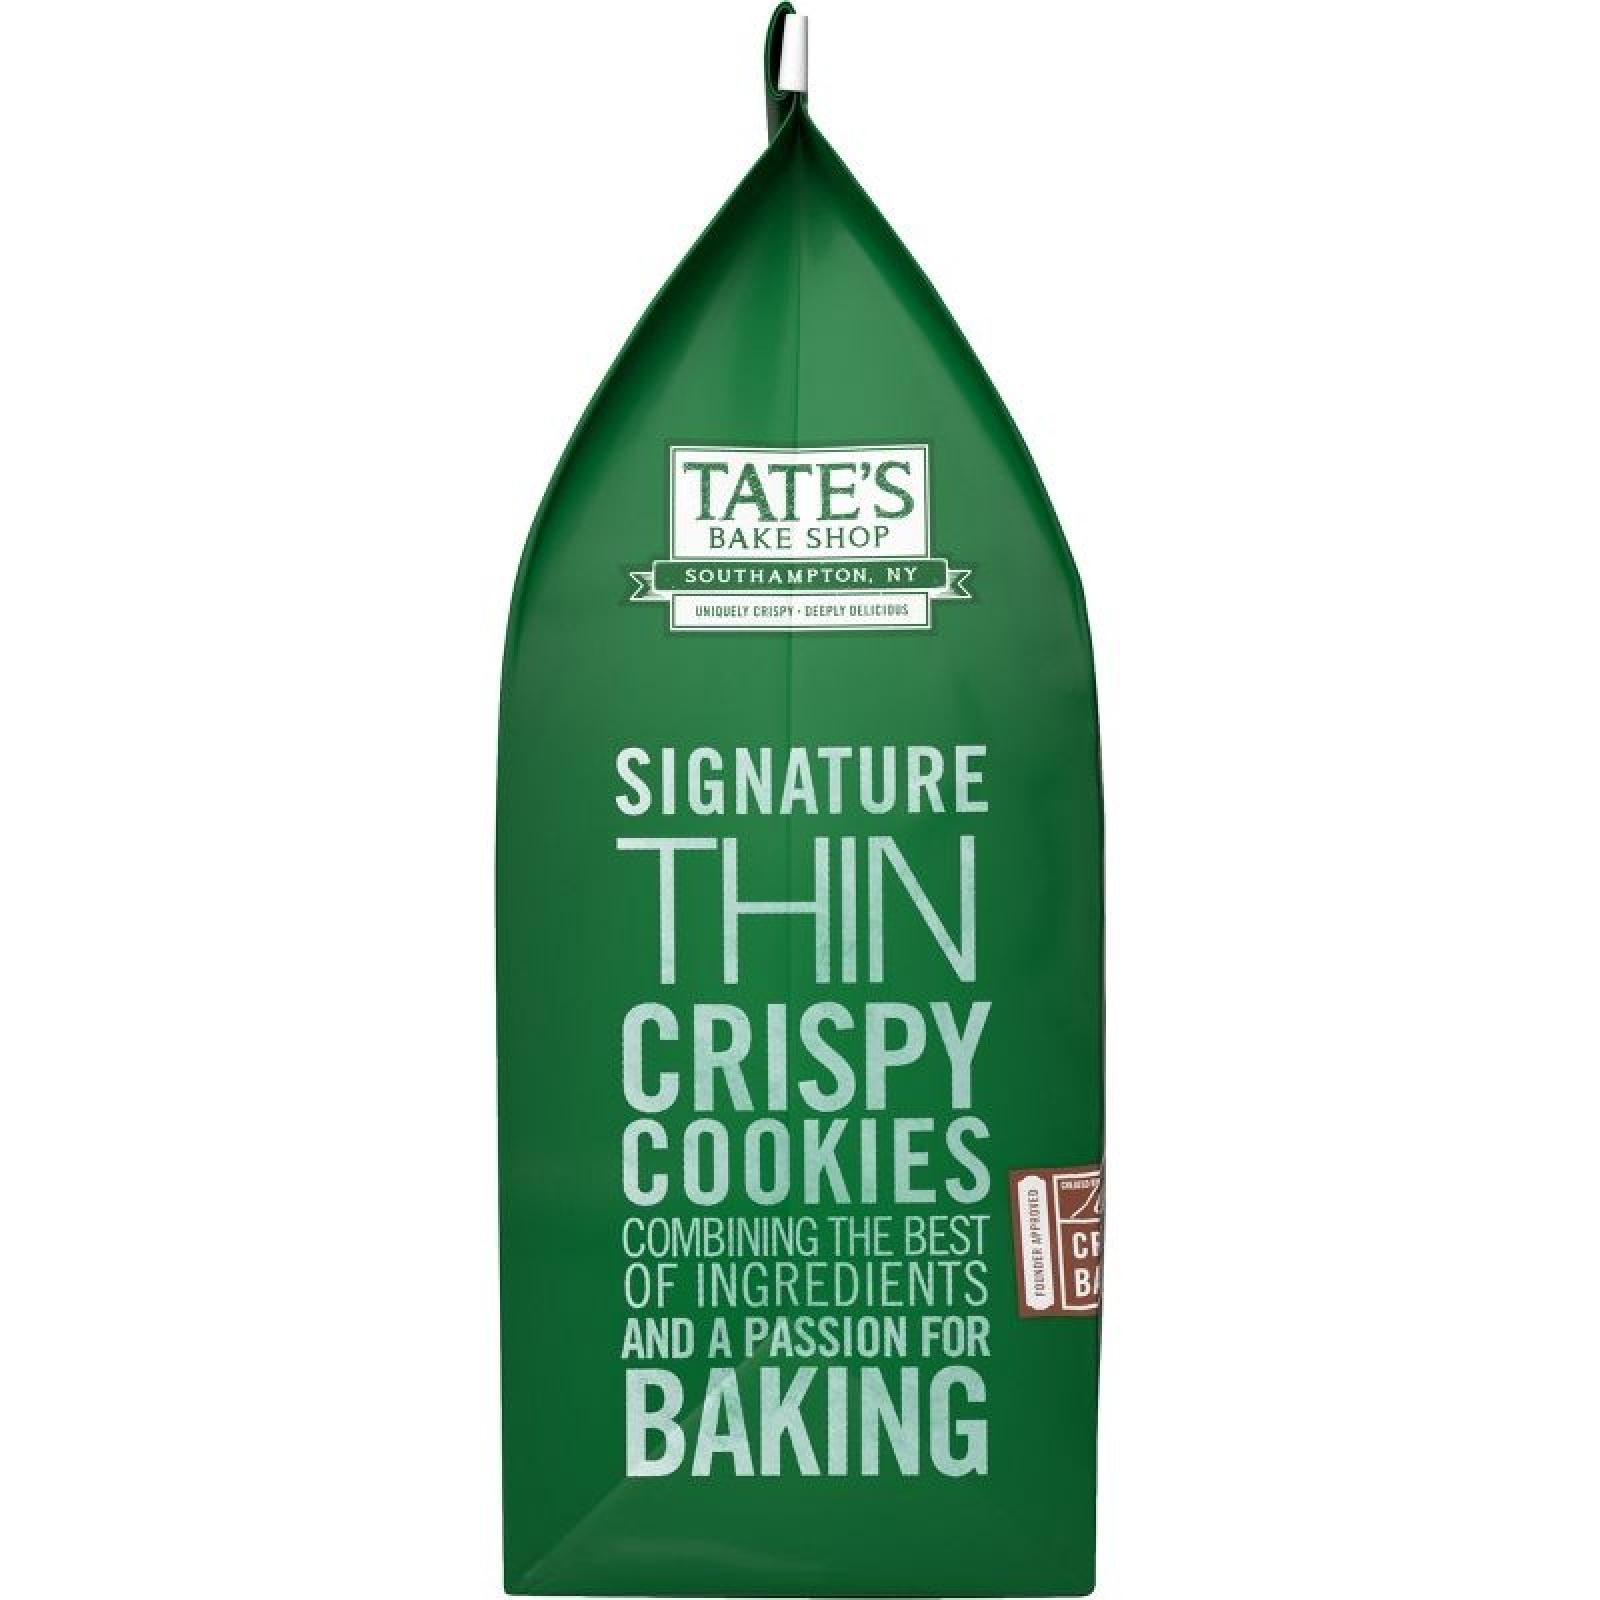 Tate's Bake Shop Signature Chocolate Chip Cookies